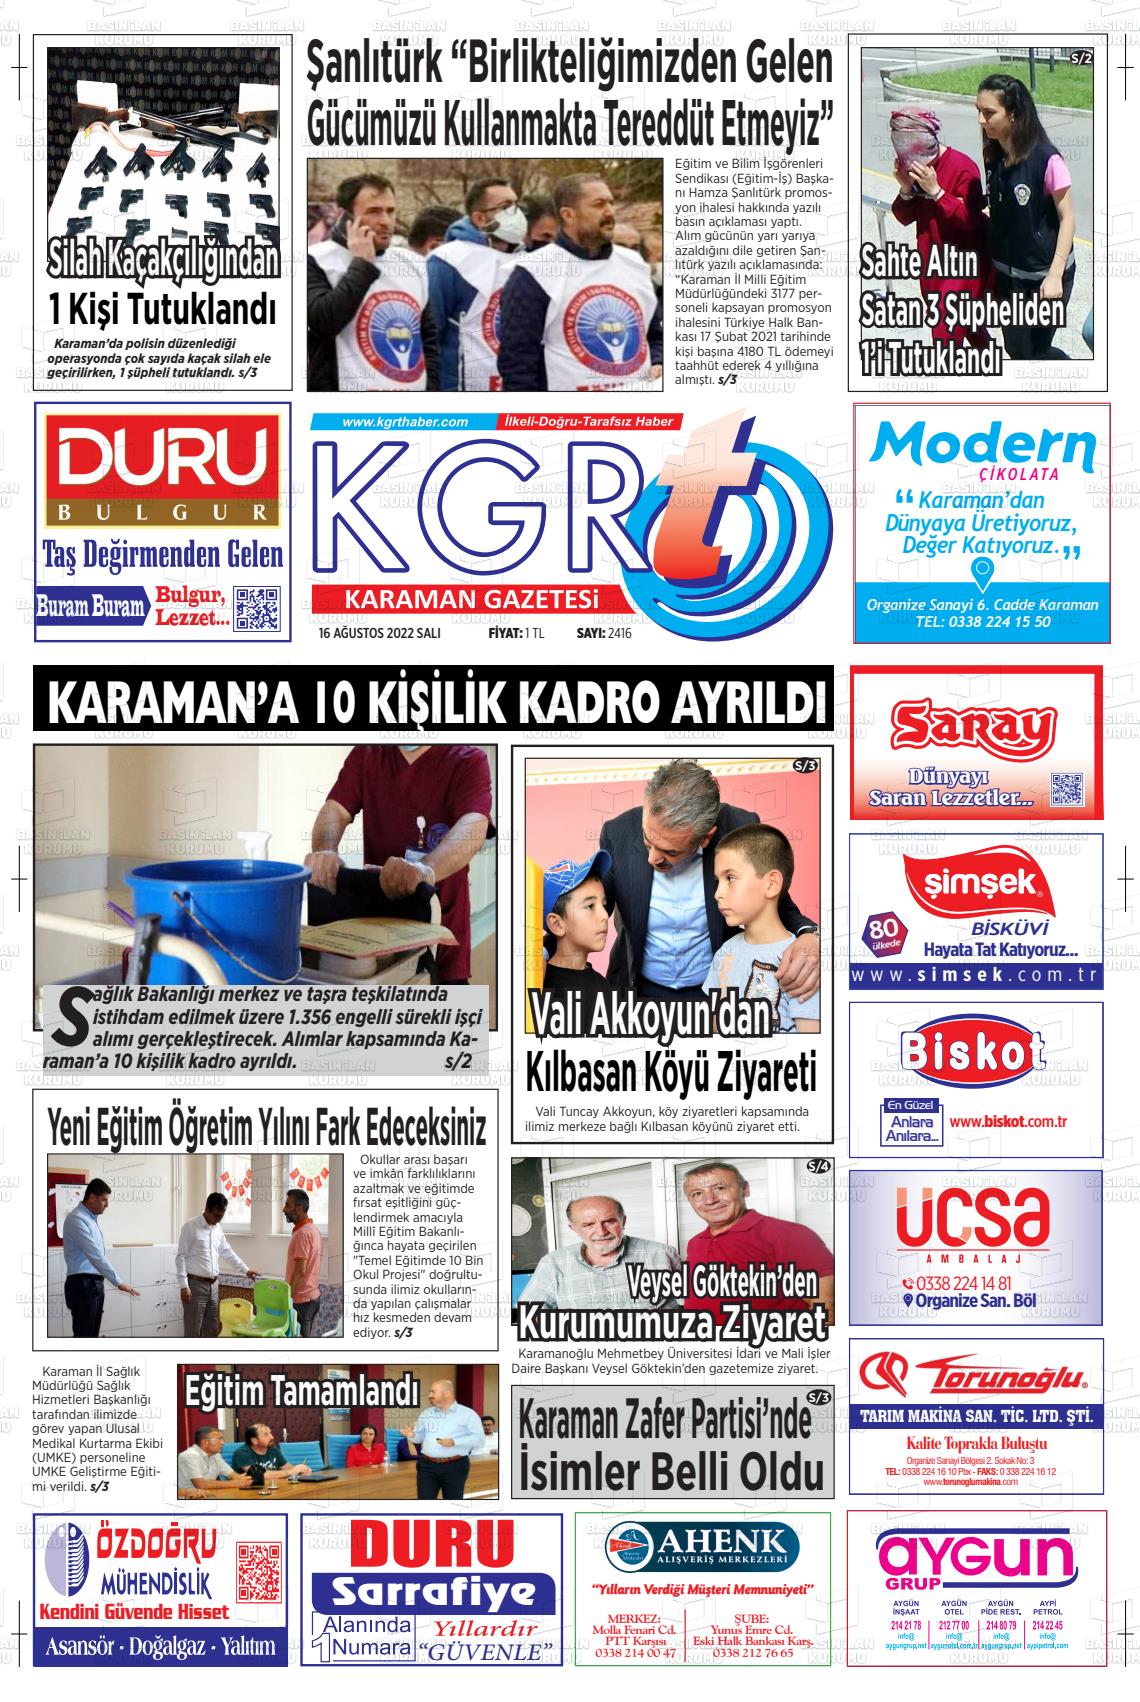 16 Ağustos 2022 Kgrt Karaman Gazete Manşeti